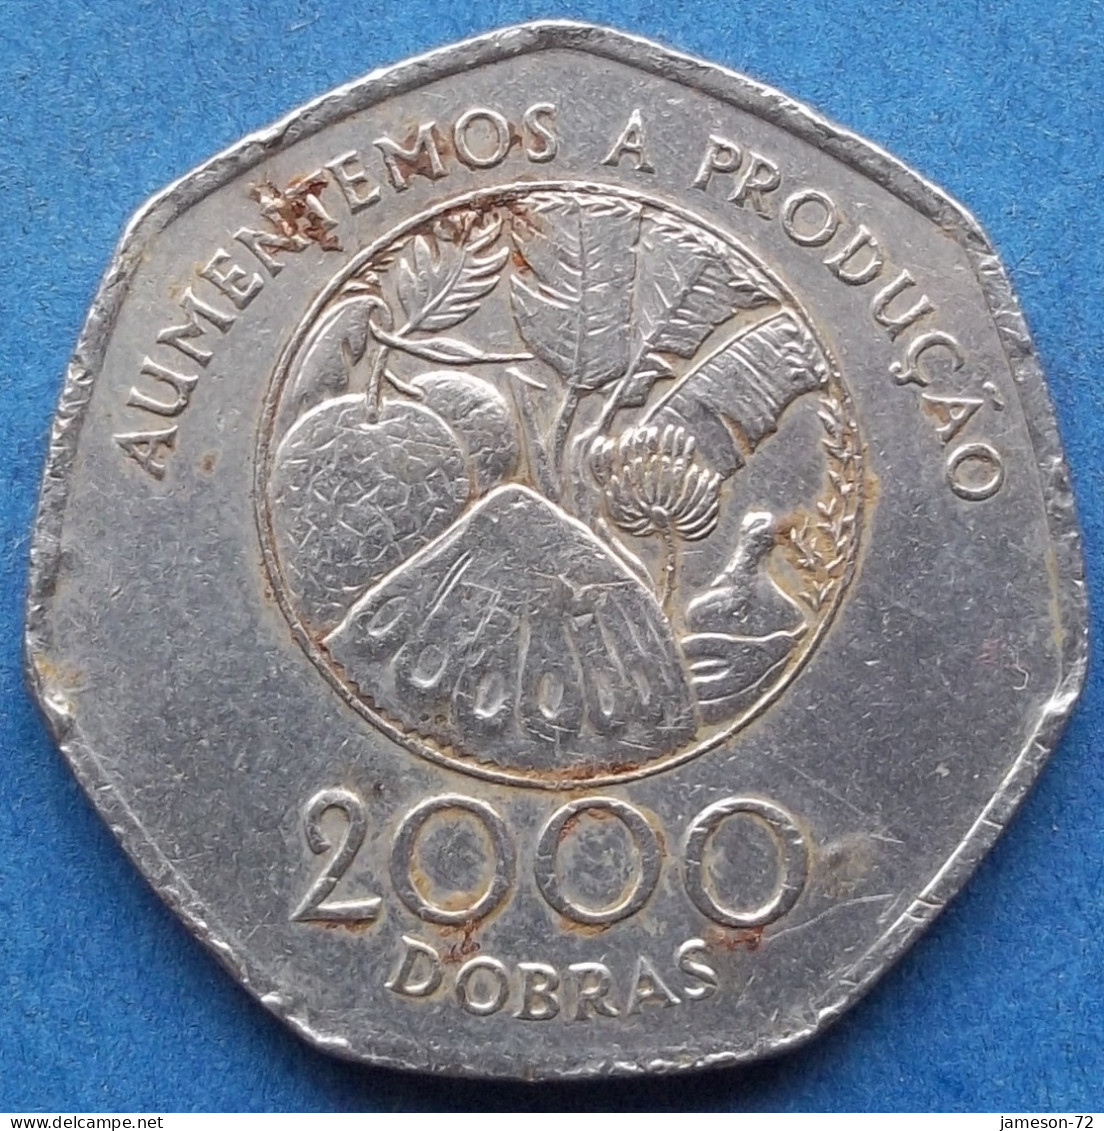 SAINT THOMAS & PRINCE ISLAND - 2000 Dobras 1997 "Tropical Food Plants" KM#91 Democratic Rep. (1975) - Edelweiss Coins - Sao Tome And Principe